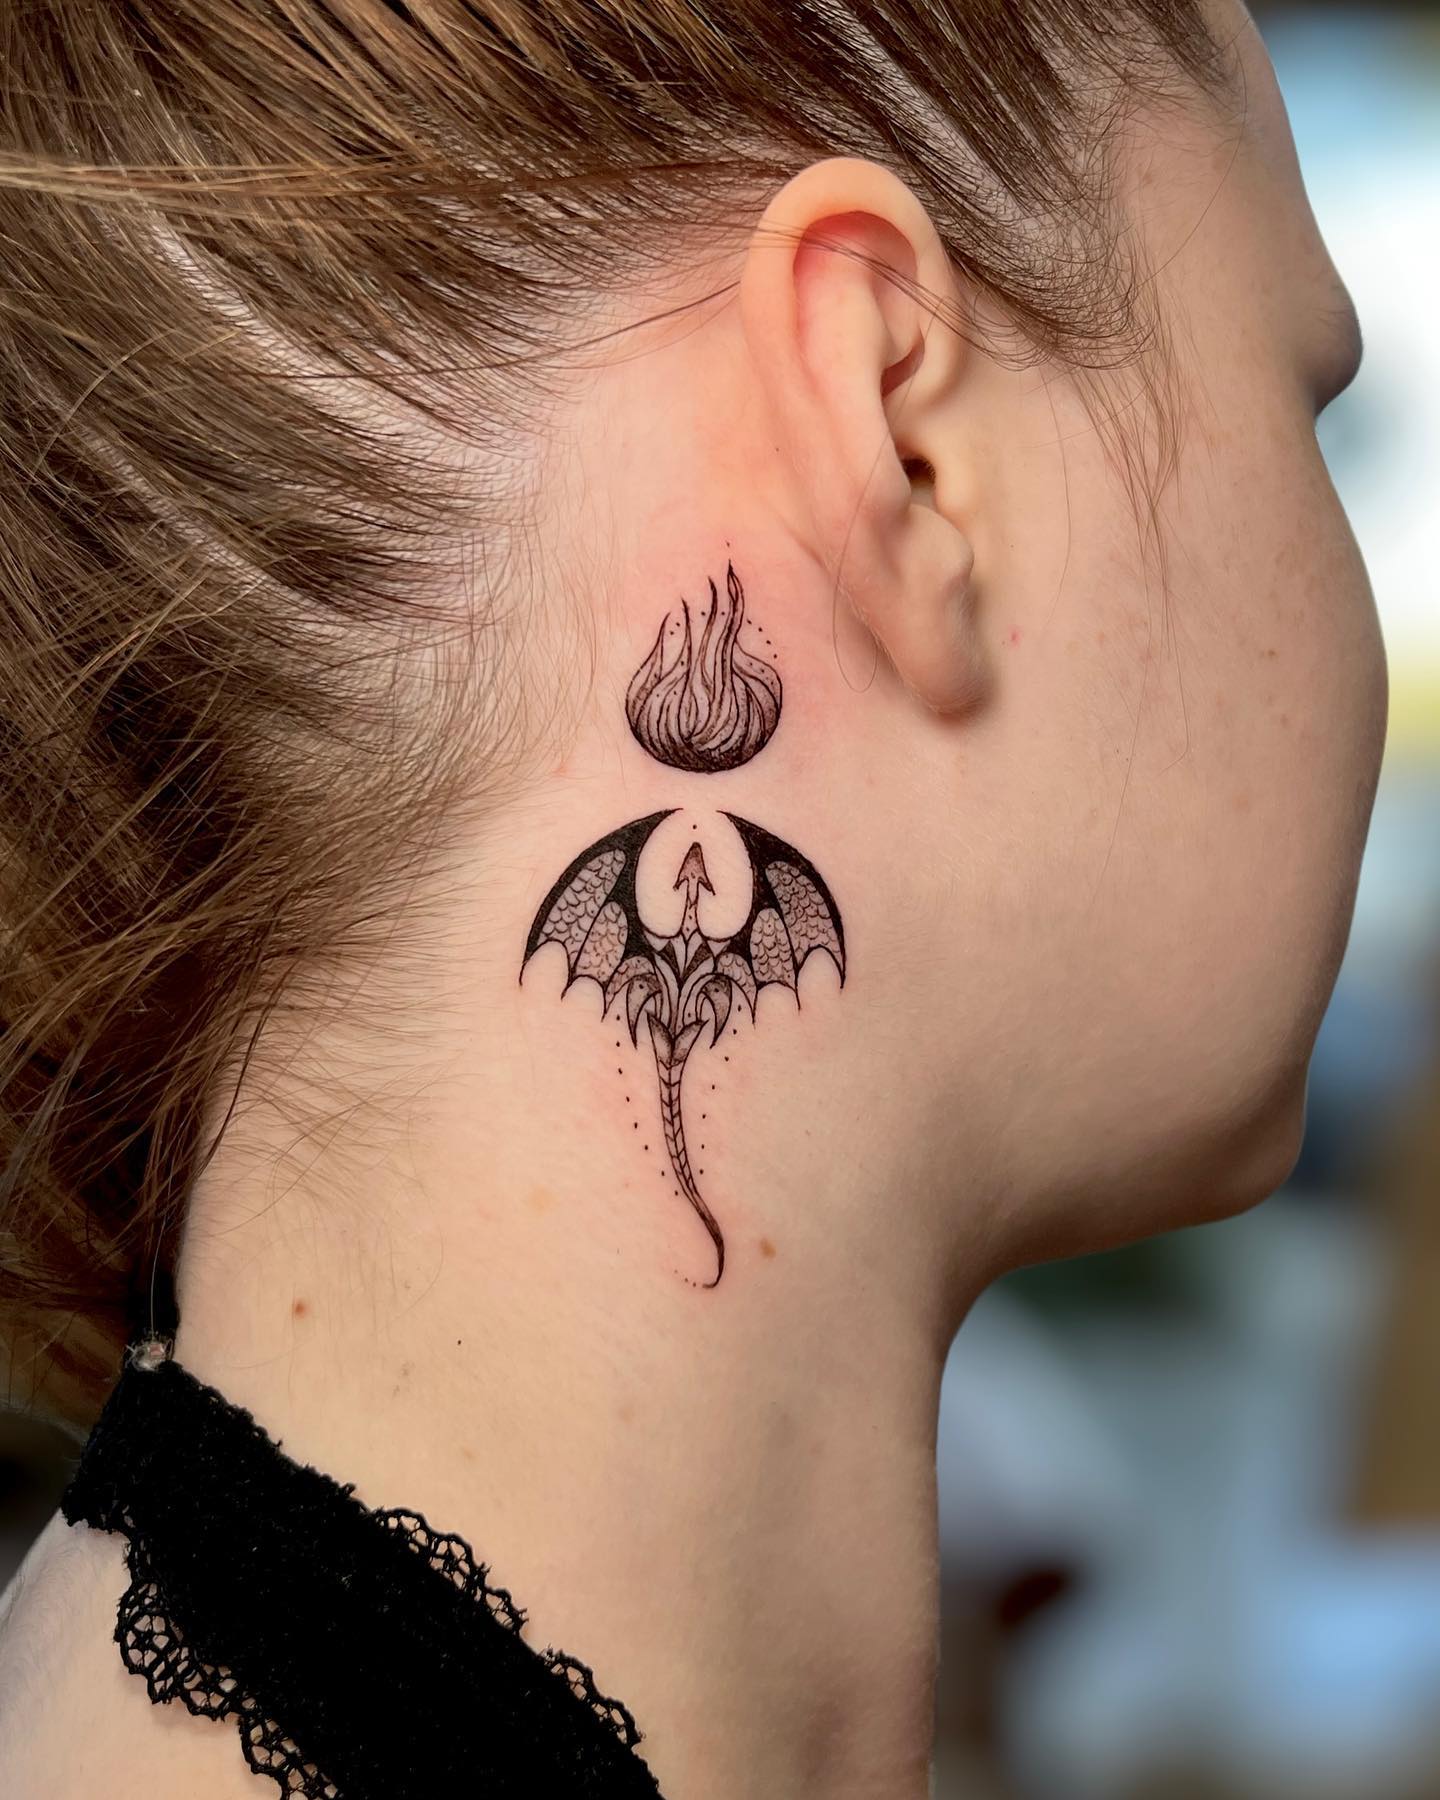 Hidden Semicolon Tattoo in the Form of Dragon